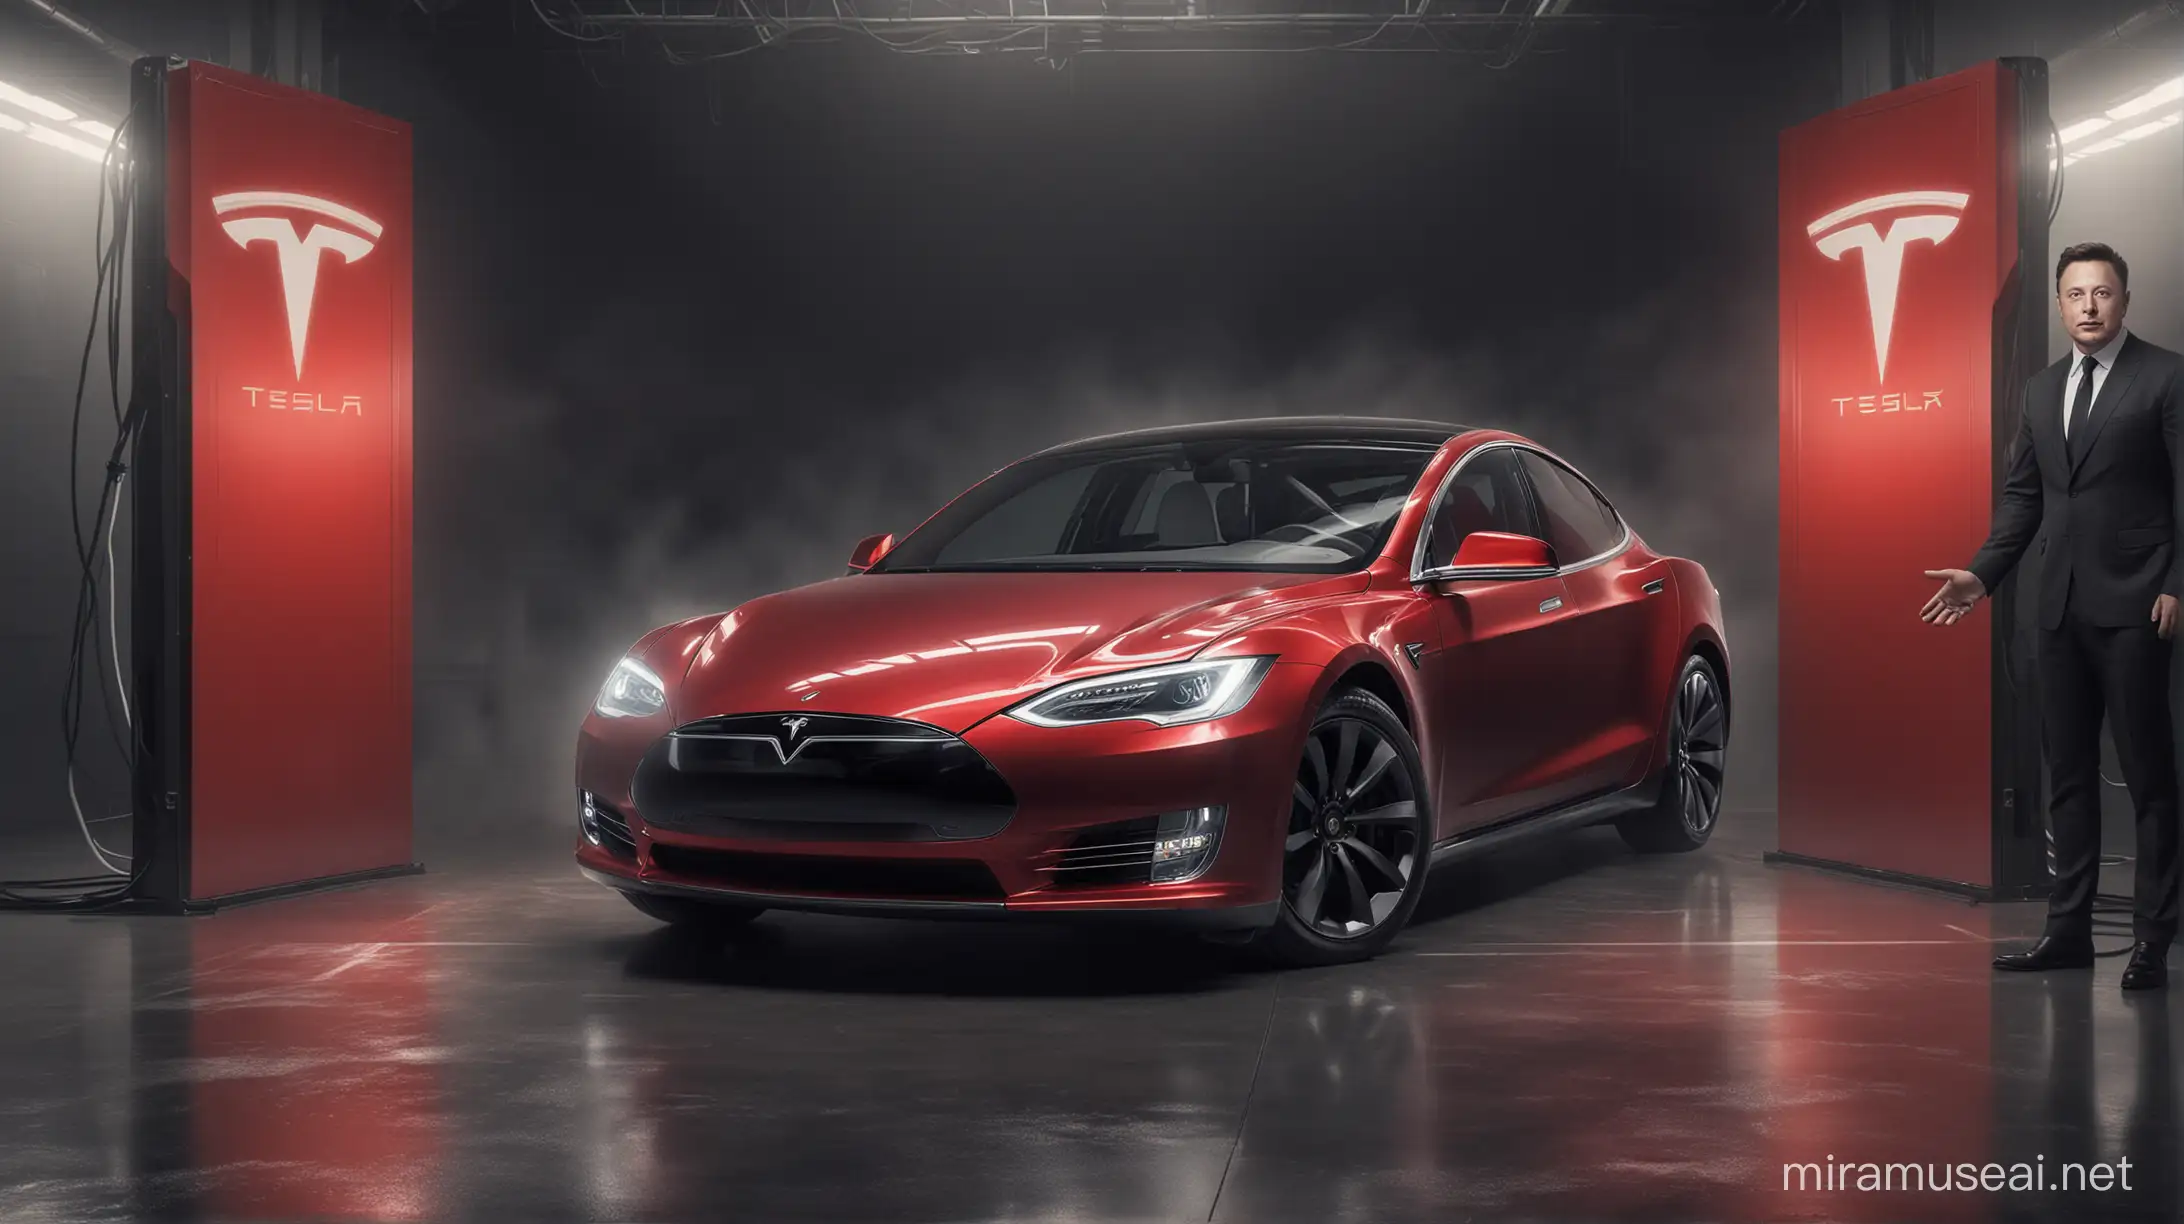 Create a striking image featuring Elon Musk, the visionary CEO of Tesla, alongside the iconic Tesla logo